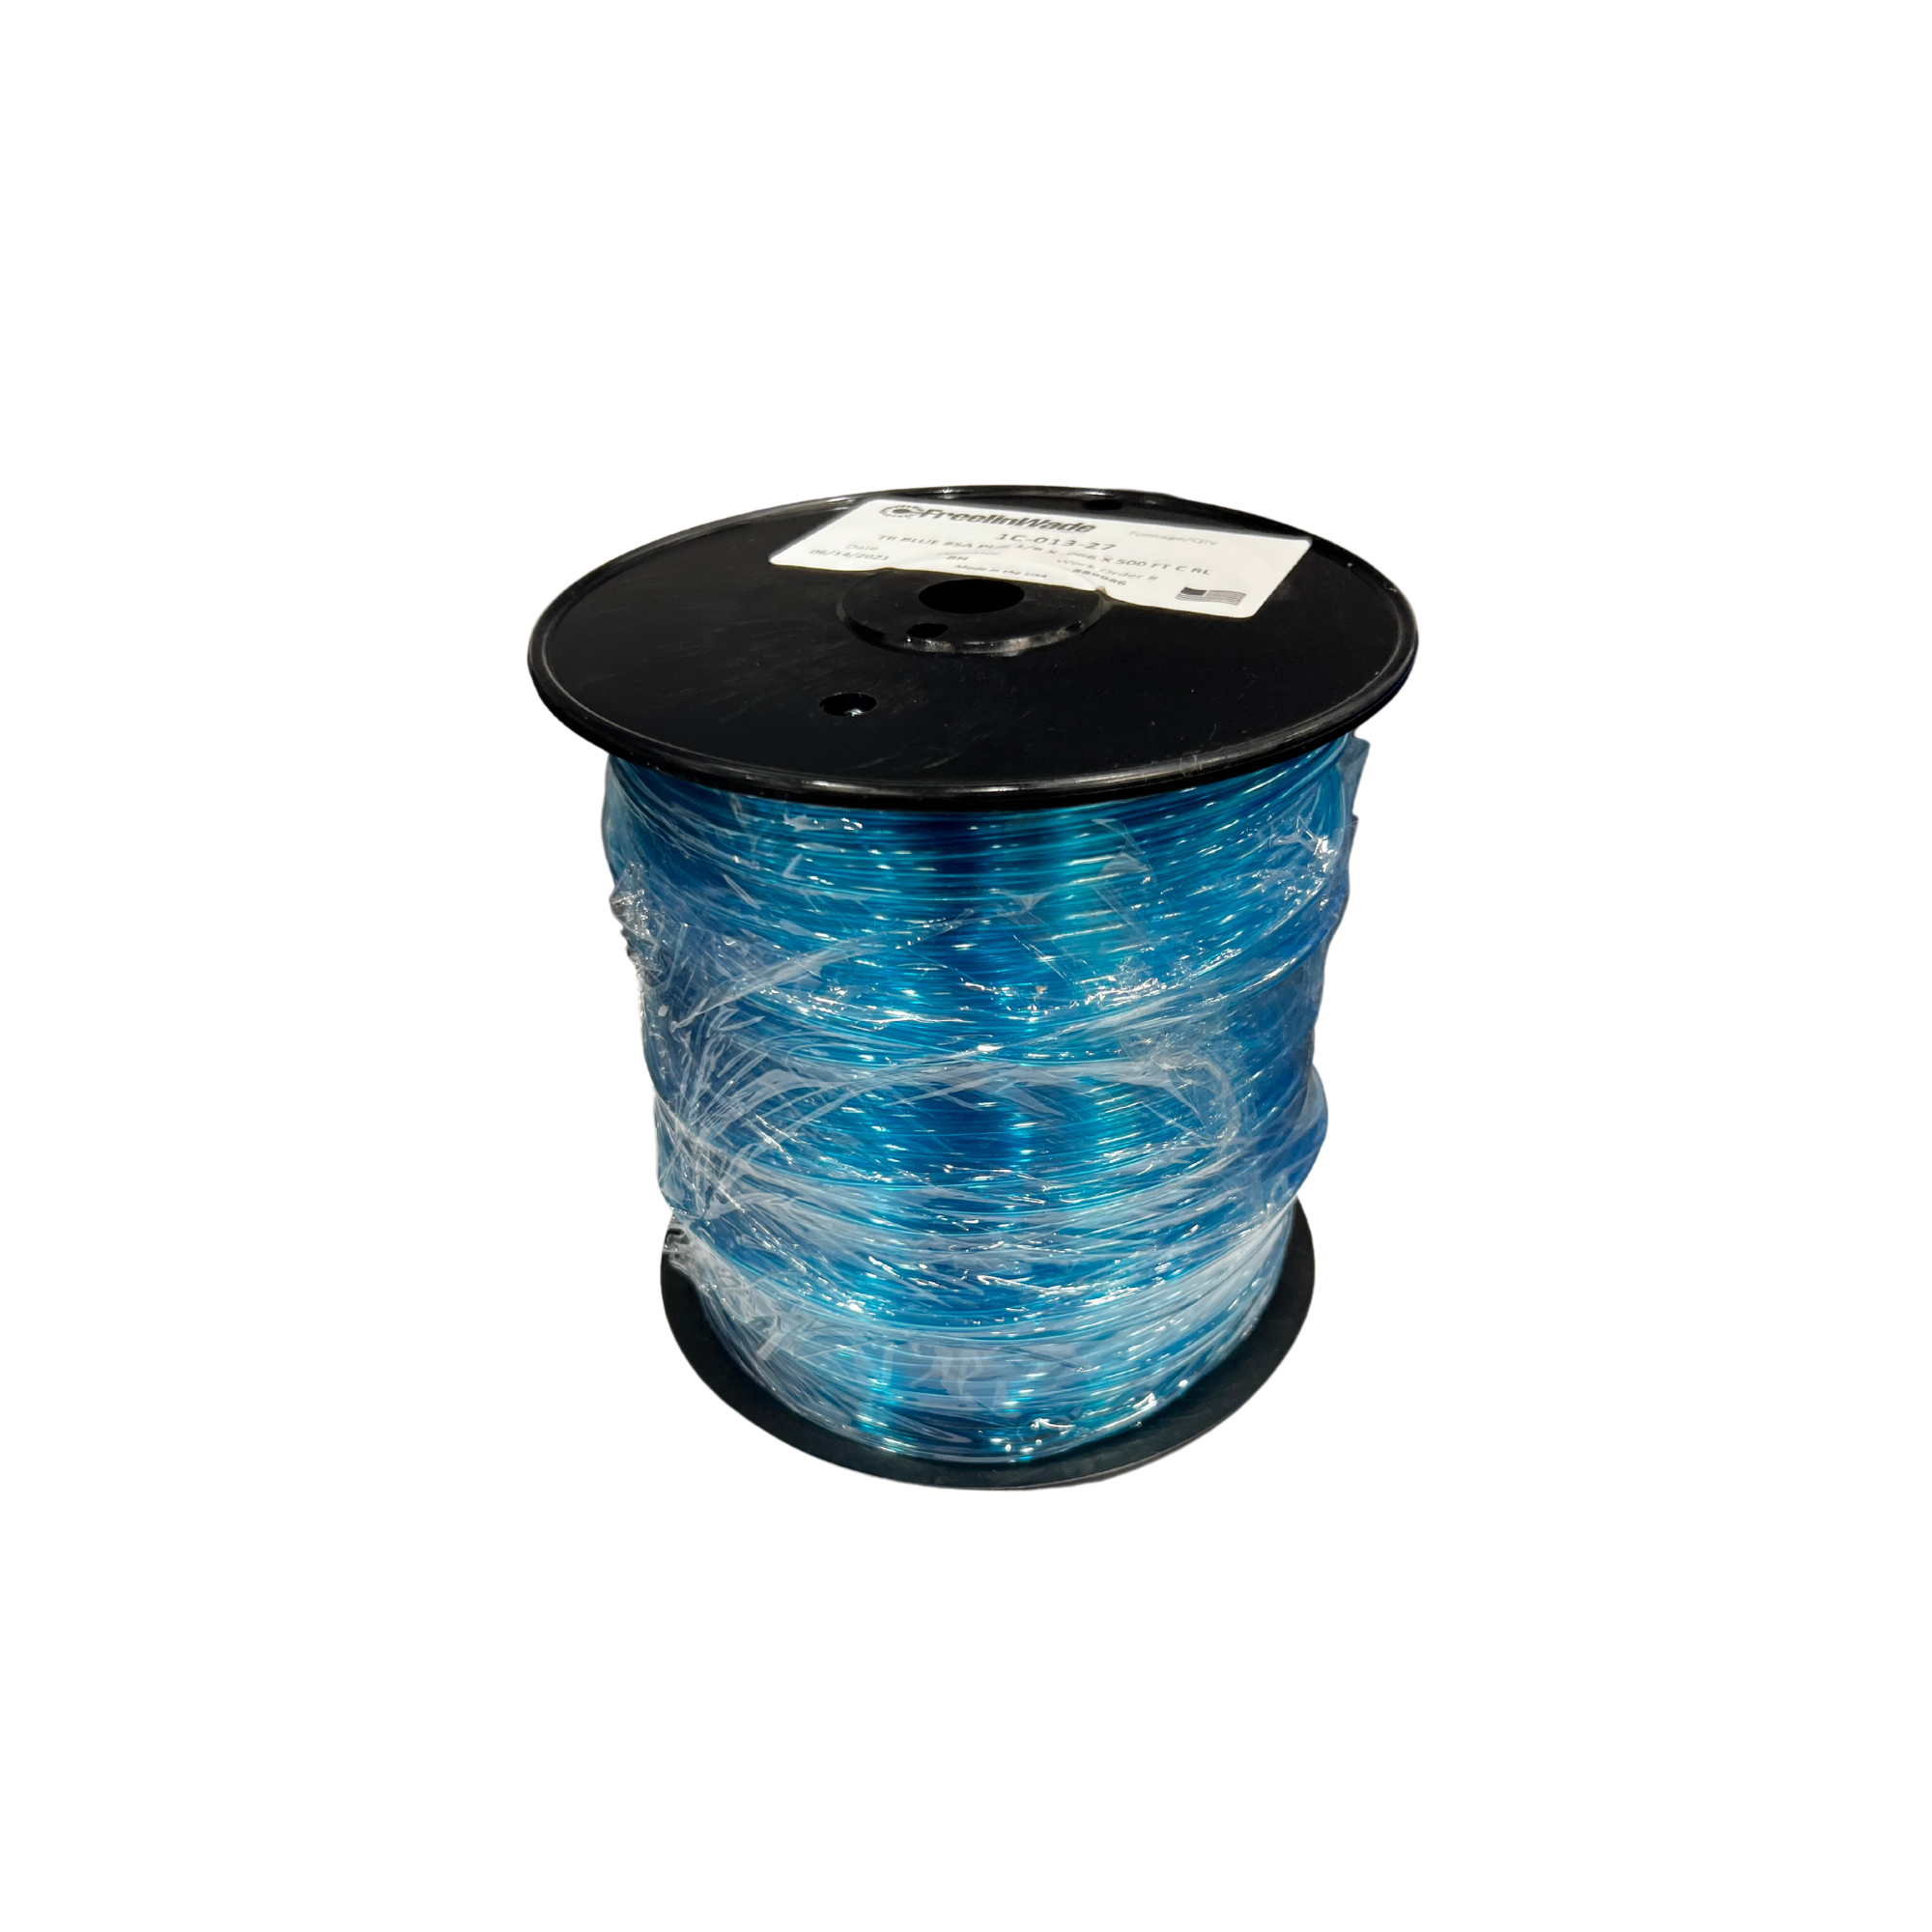 Transparent blue tubing in black reel